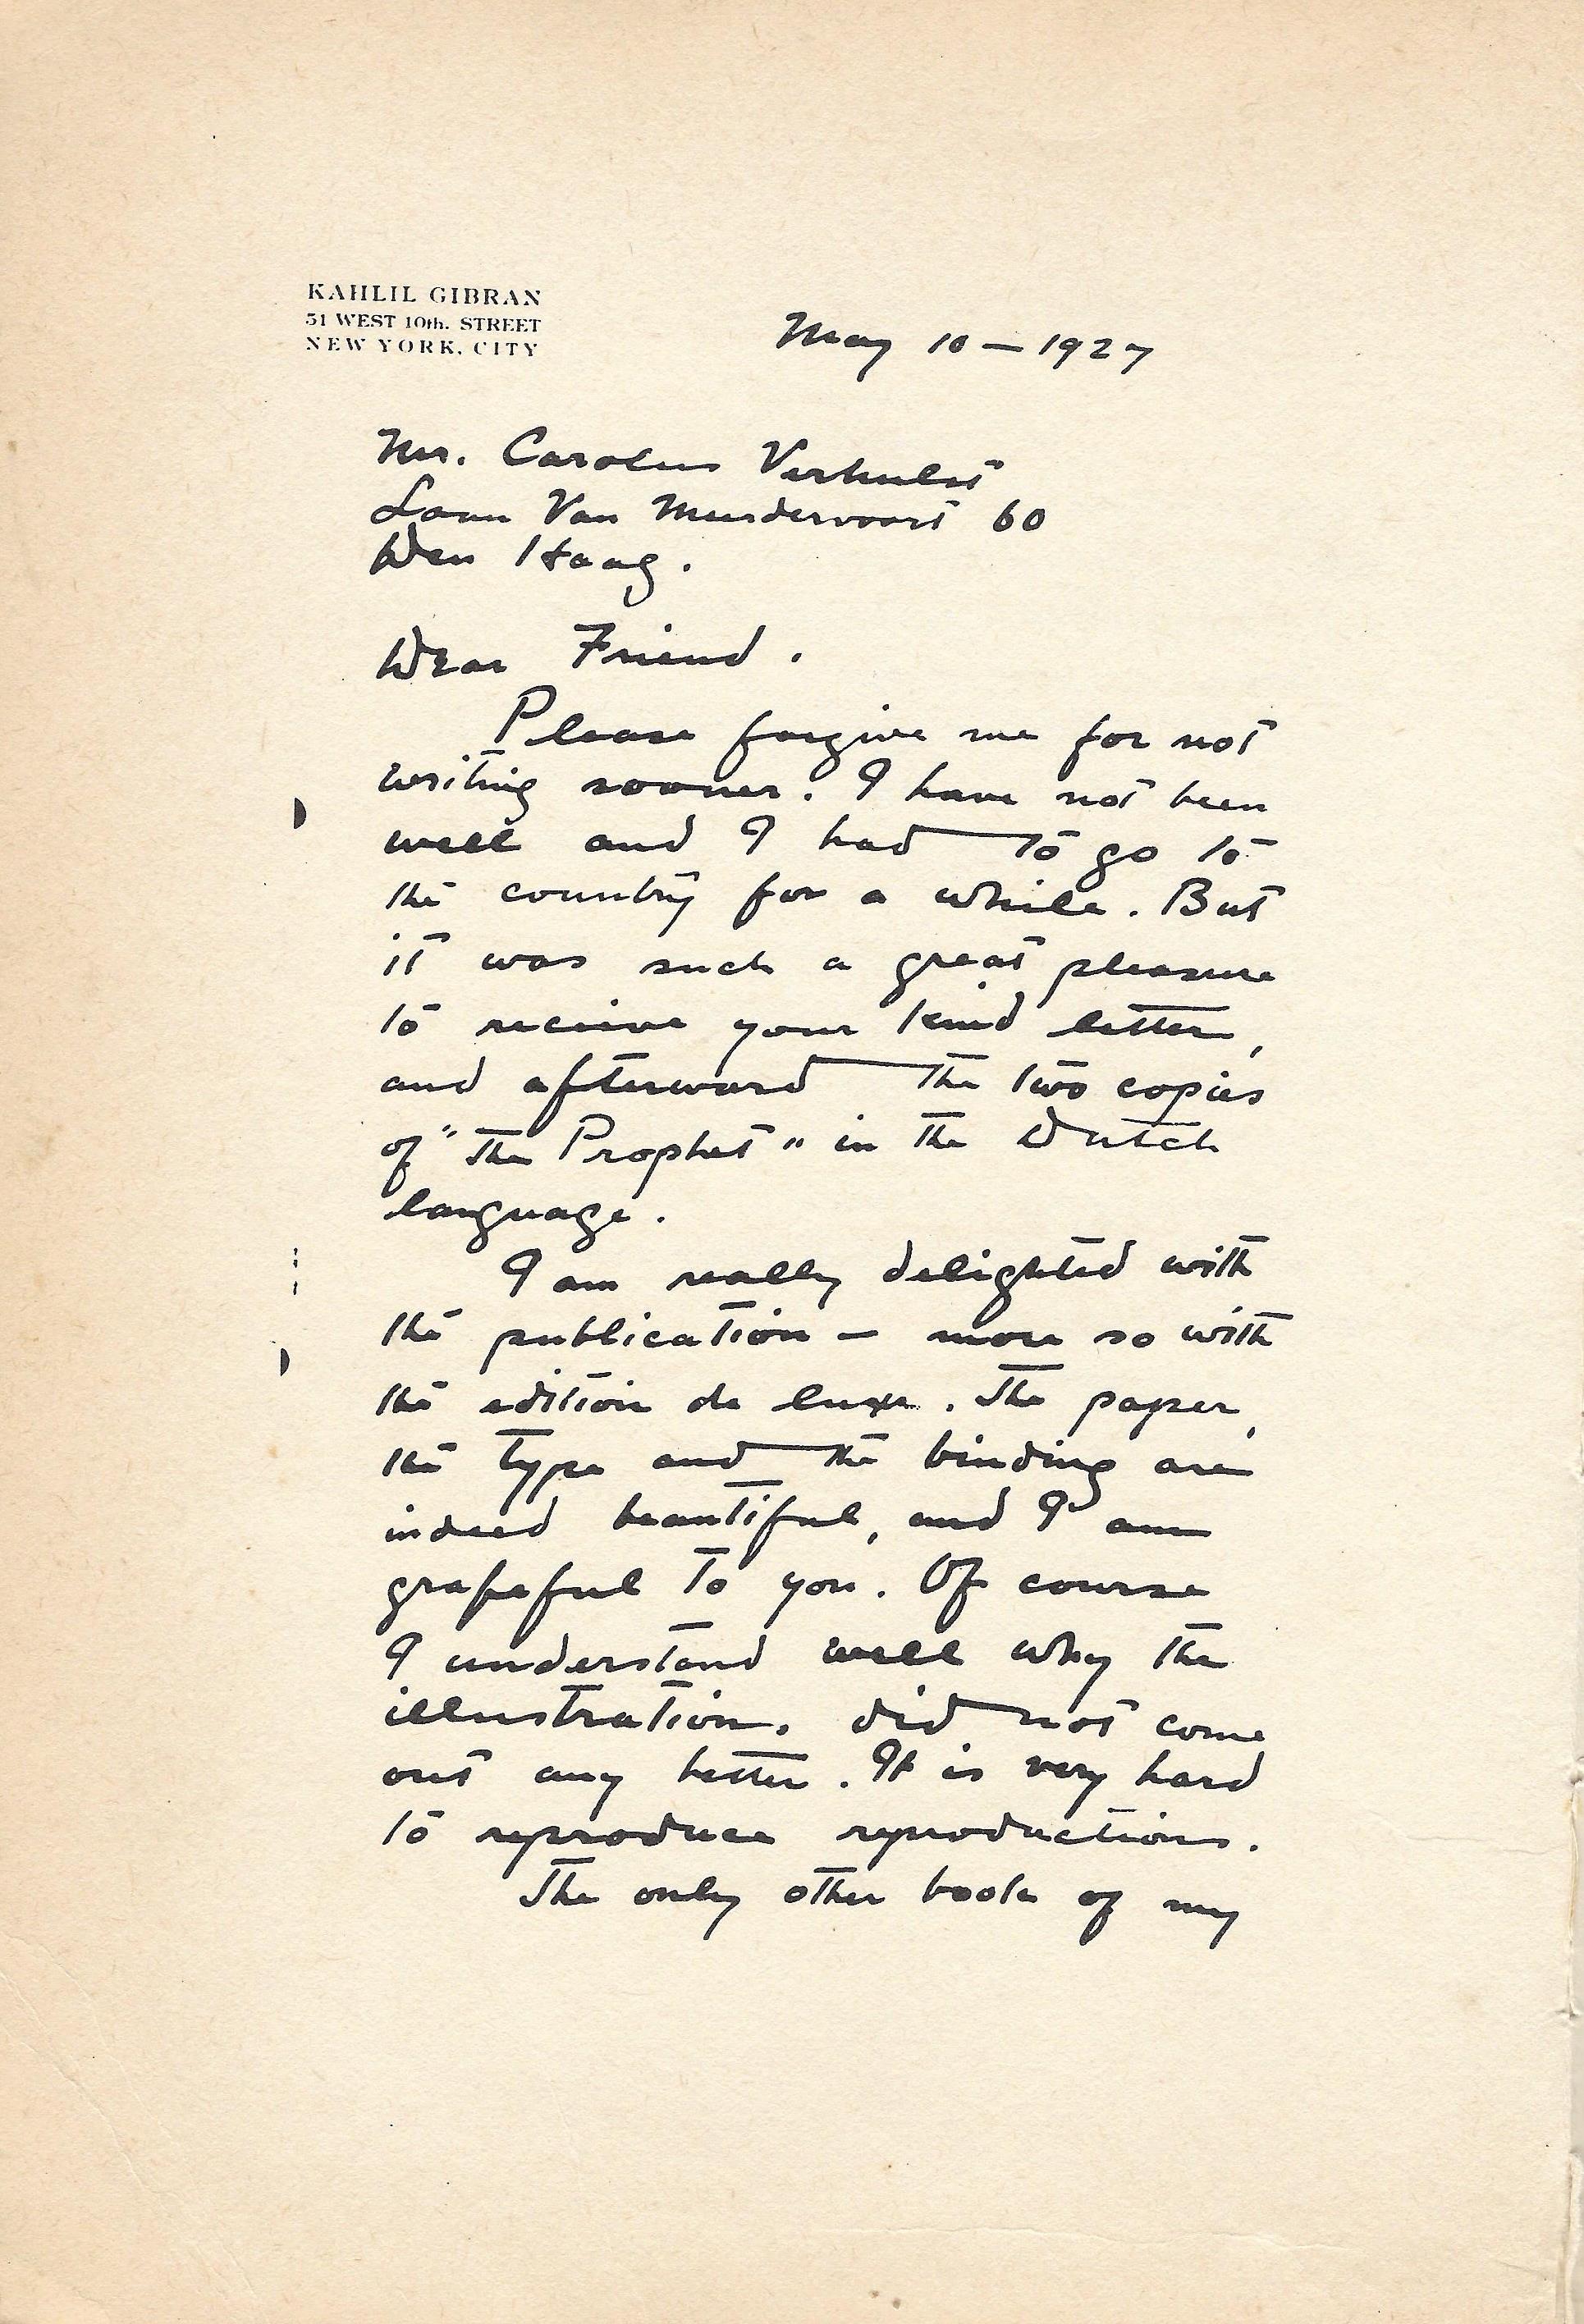 Letter of Kahlil Gibran to Carolus Verhulst, 10 May 1927